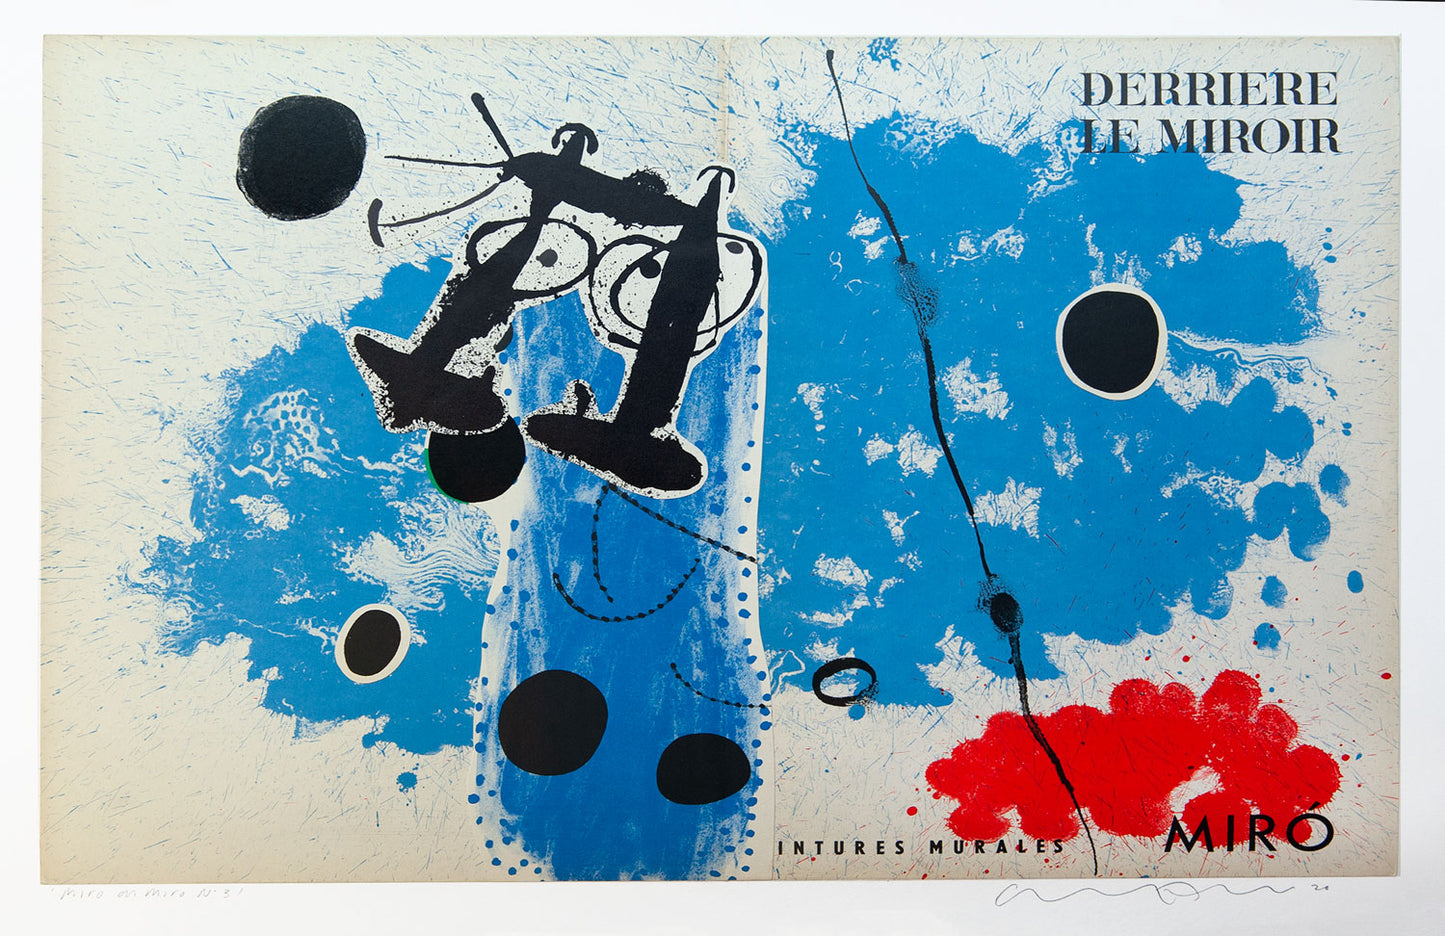 Miró on Miró No. 3